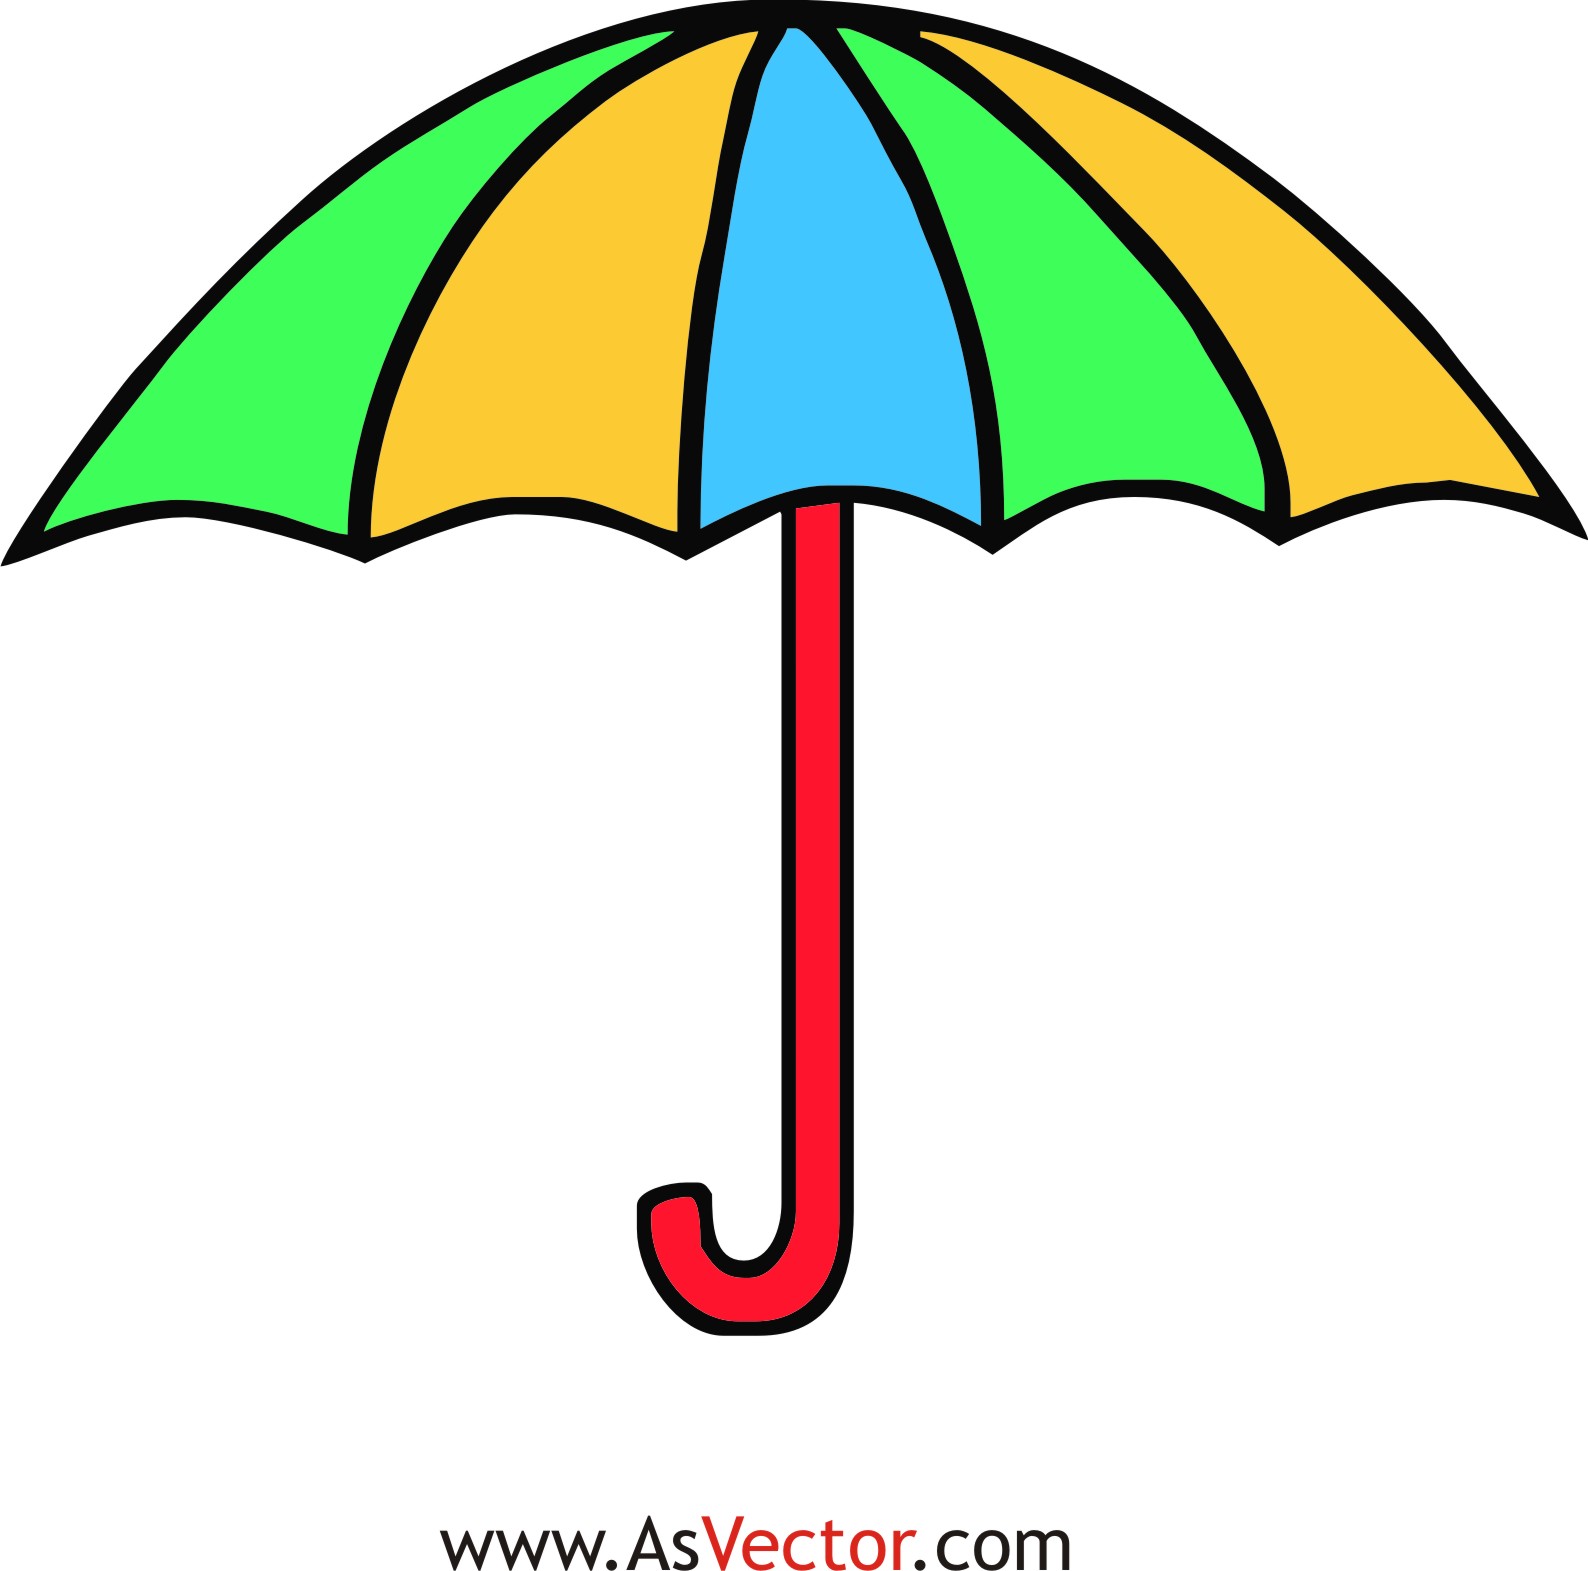 free clipart umbrella - photo #41